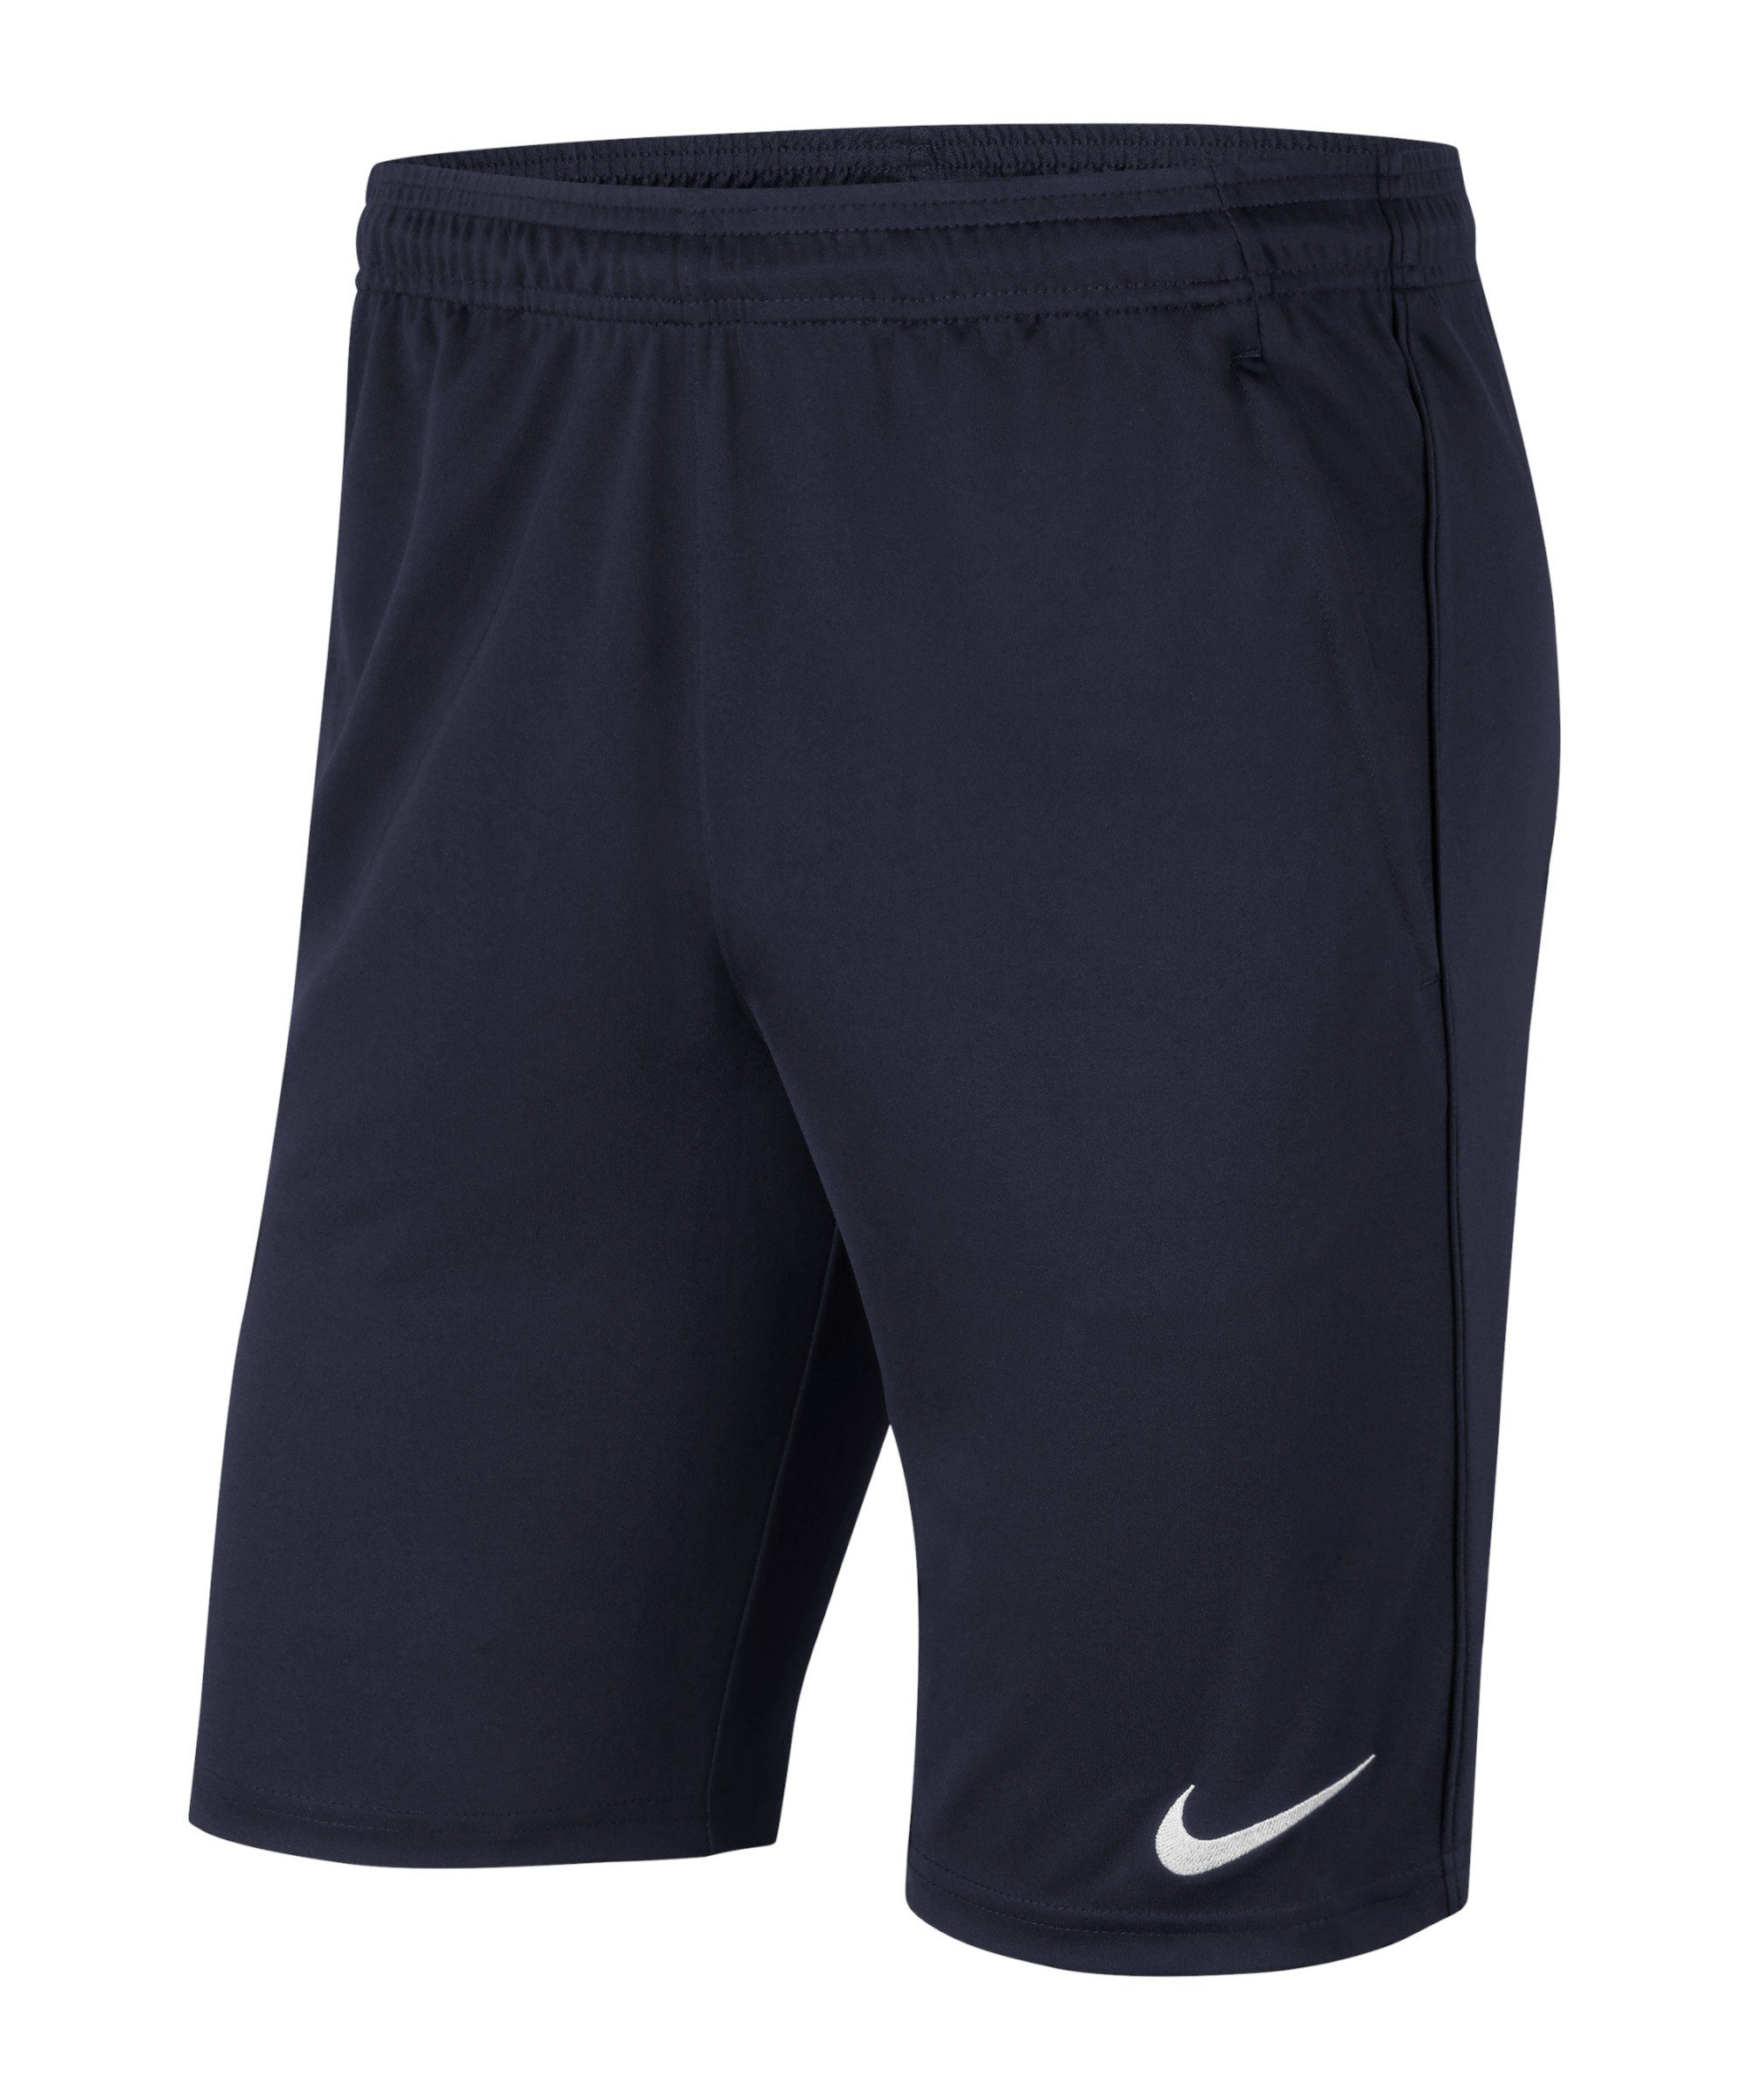 Knit blauweiss Sporthose Nike Short Park 20